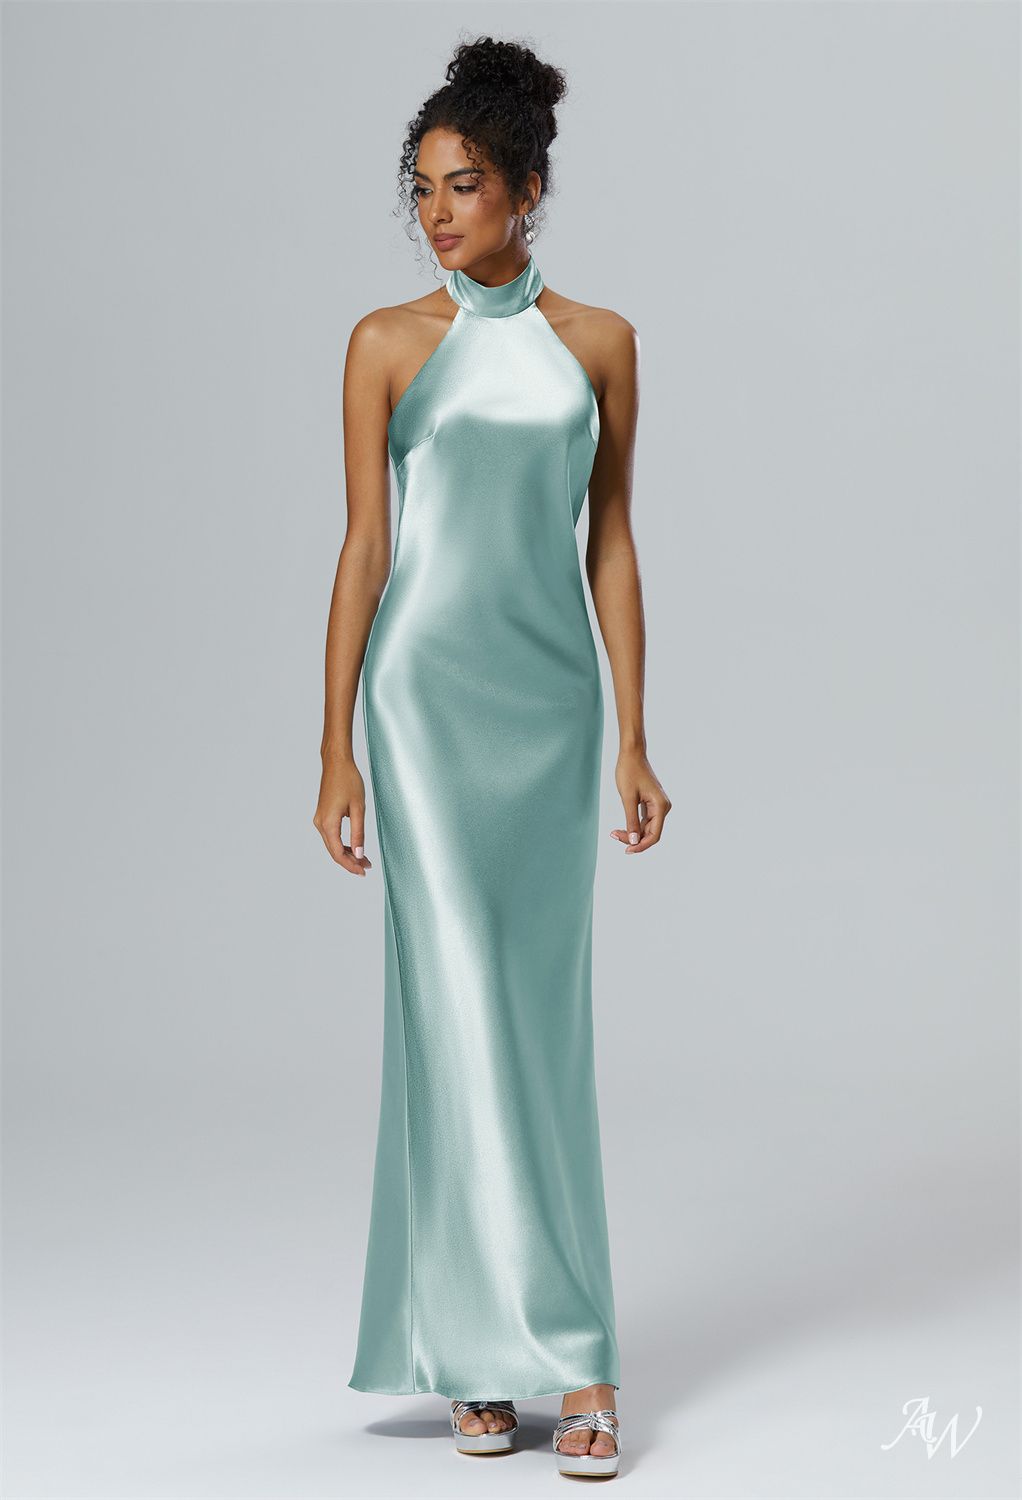 AW Mugwort Dress | AW Bridal